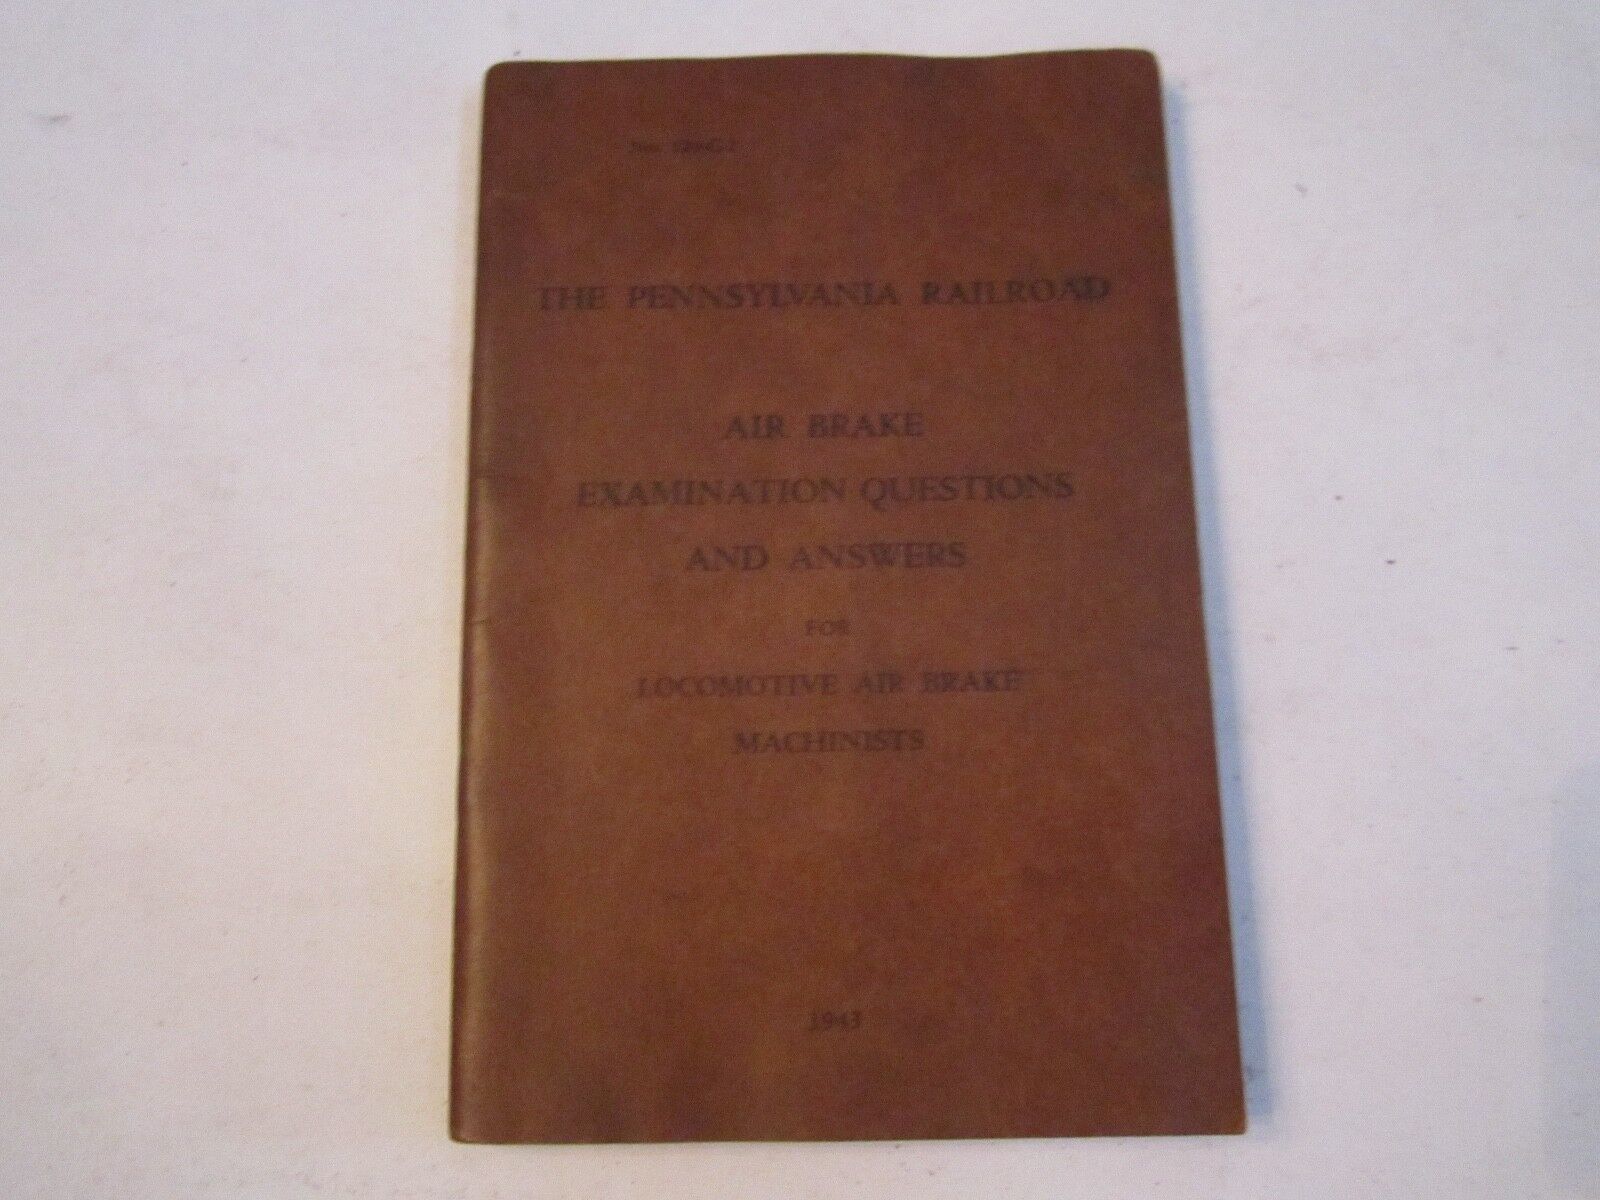 1943 PENNSYLVANIA RAILROAD AIR BRAKE EXAMINATION QUESTIONS HANDBOOK - BOX WW